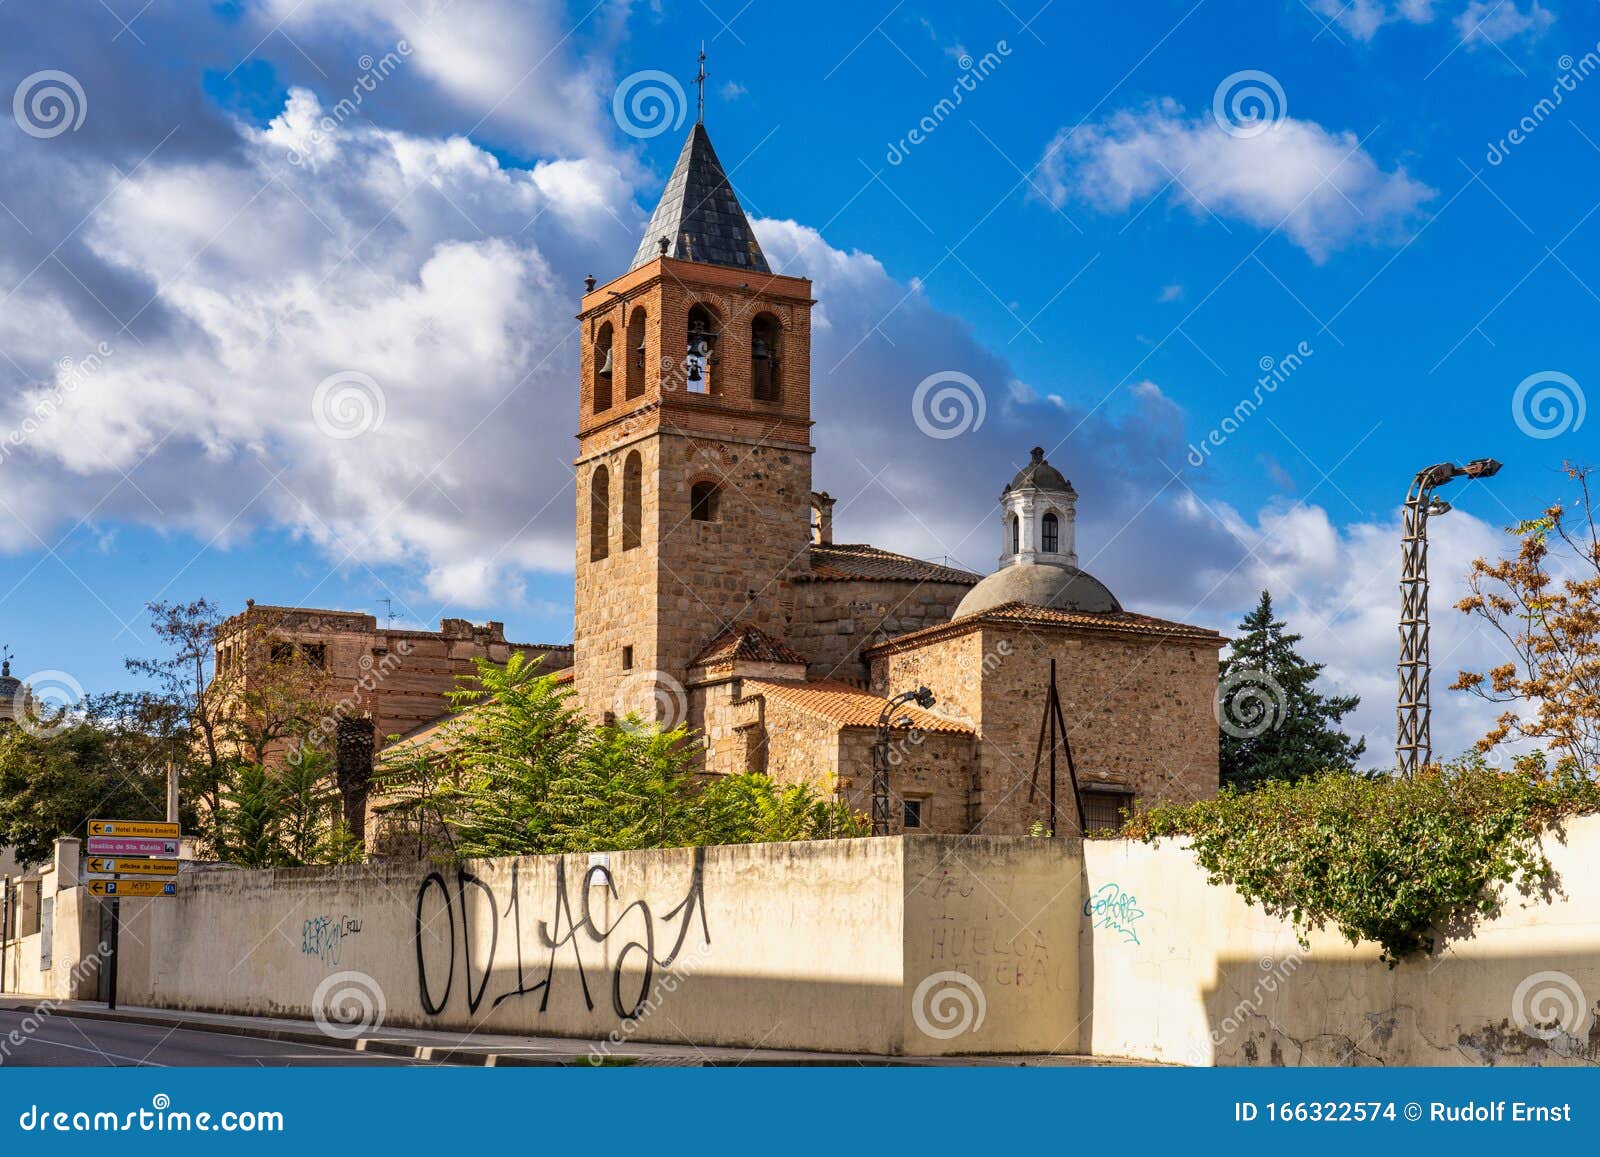 The Basilica of Santa Eulalia in Merida, Extremadura, Spain Stock Photo -  Image of heritage, christianity: 166322574